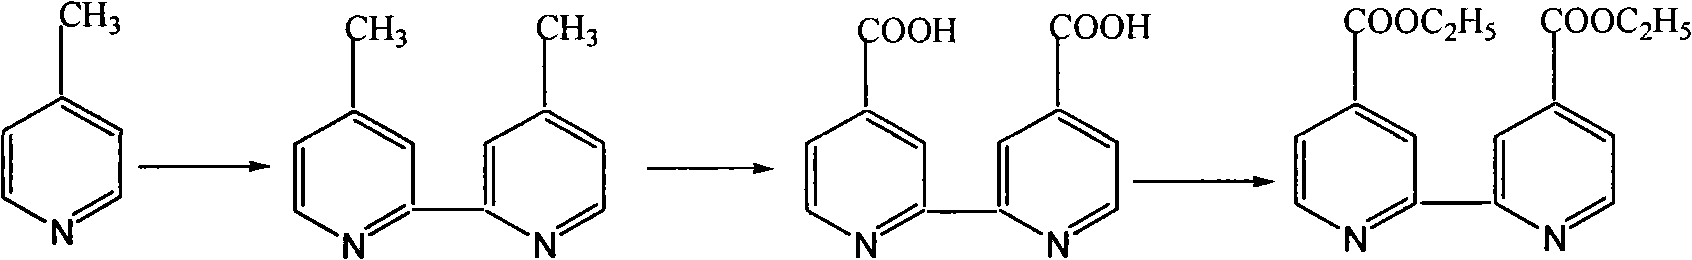 Catalyst for synthesizing polyketone by copolymerization of carbon monooxide and phenyl ethylene